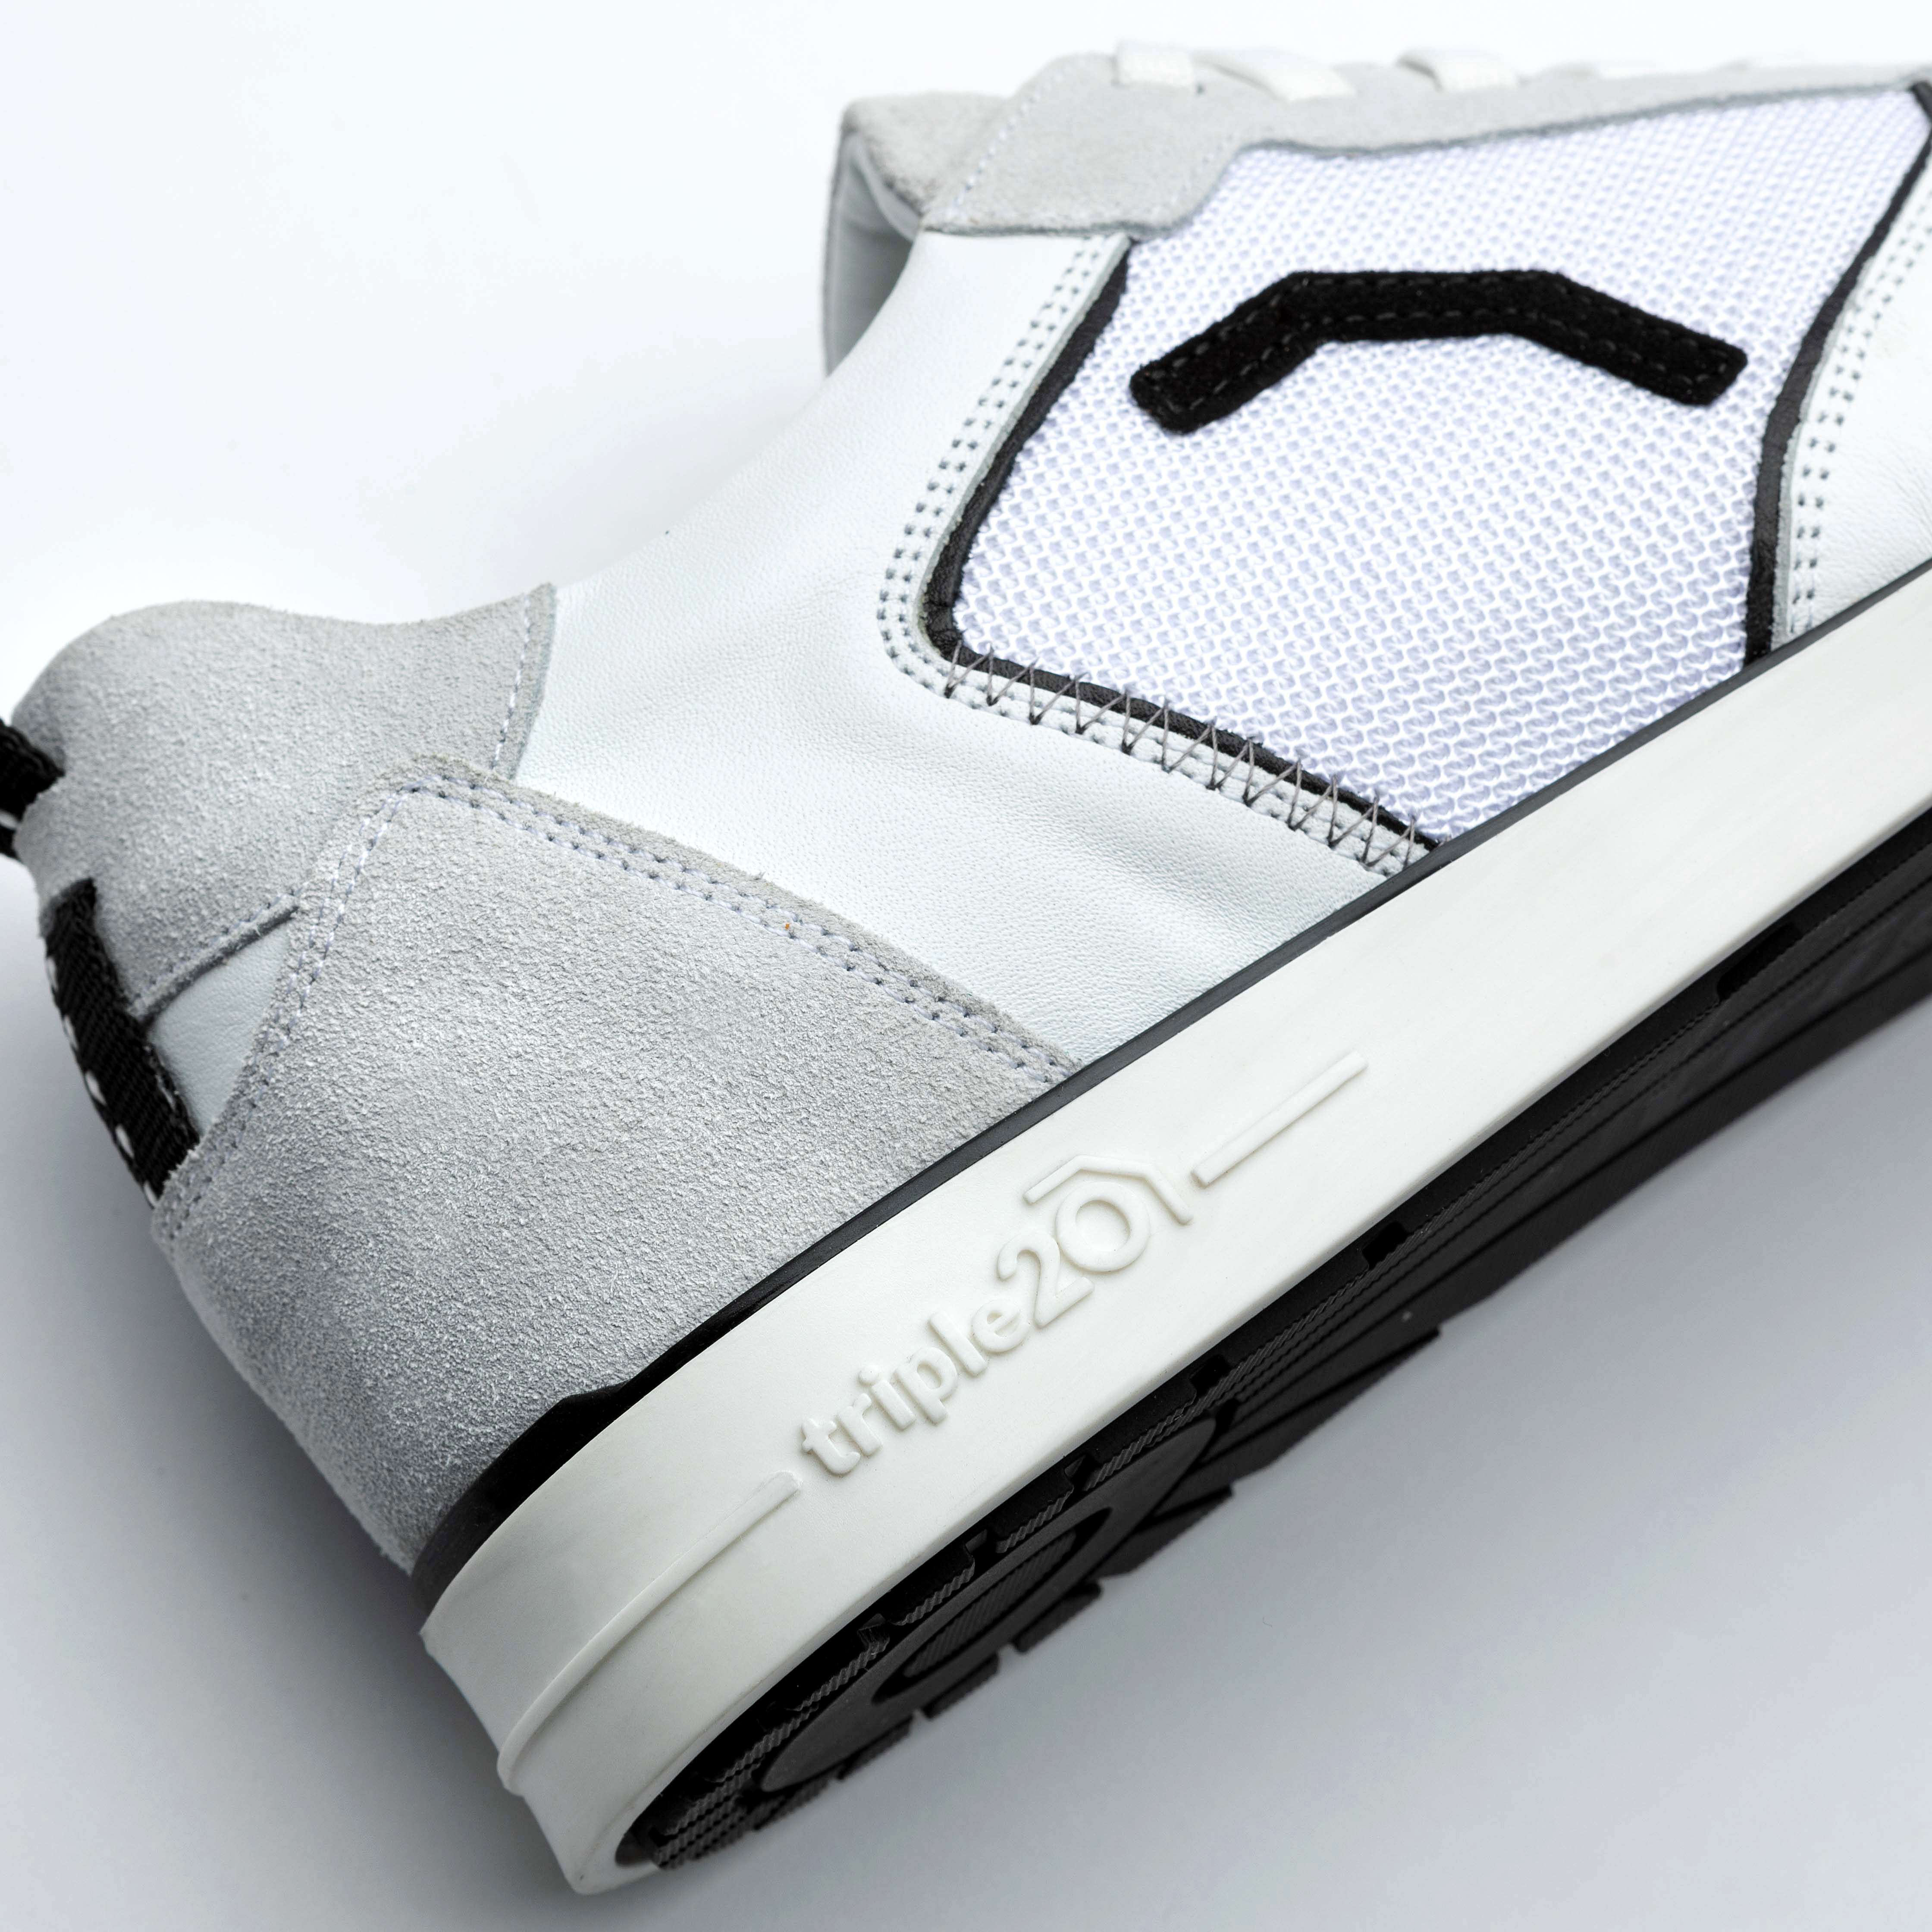 Triple20 Dartsshoes - Textil Leder Weiß/Schwarz